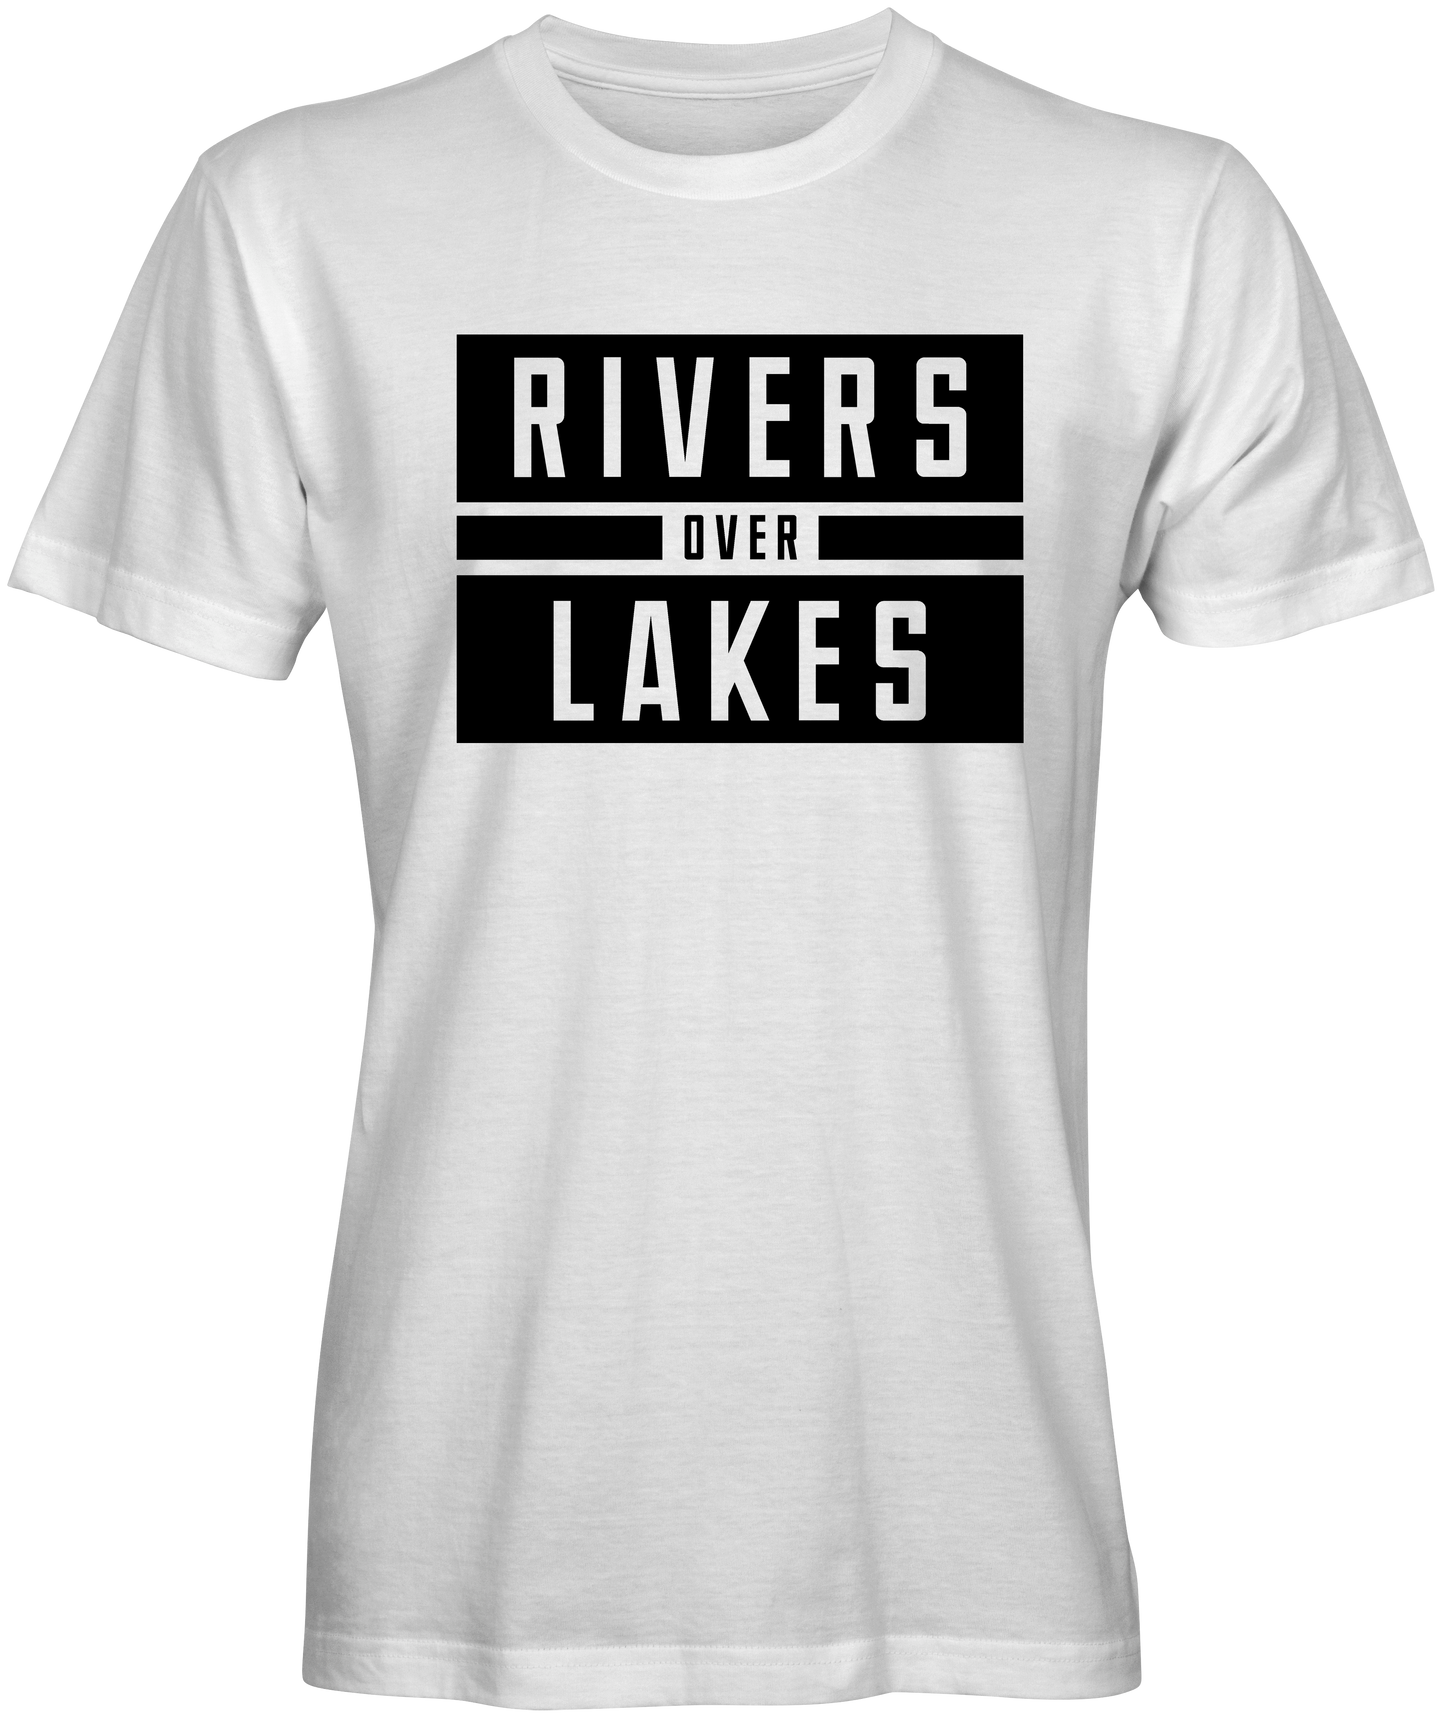 Rivers over Lakes - T Rouge KE